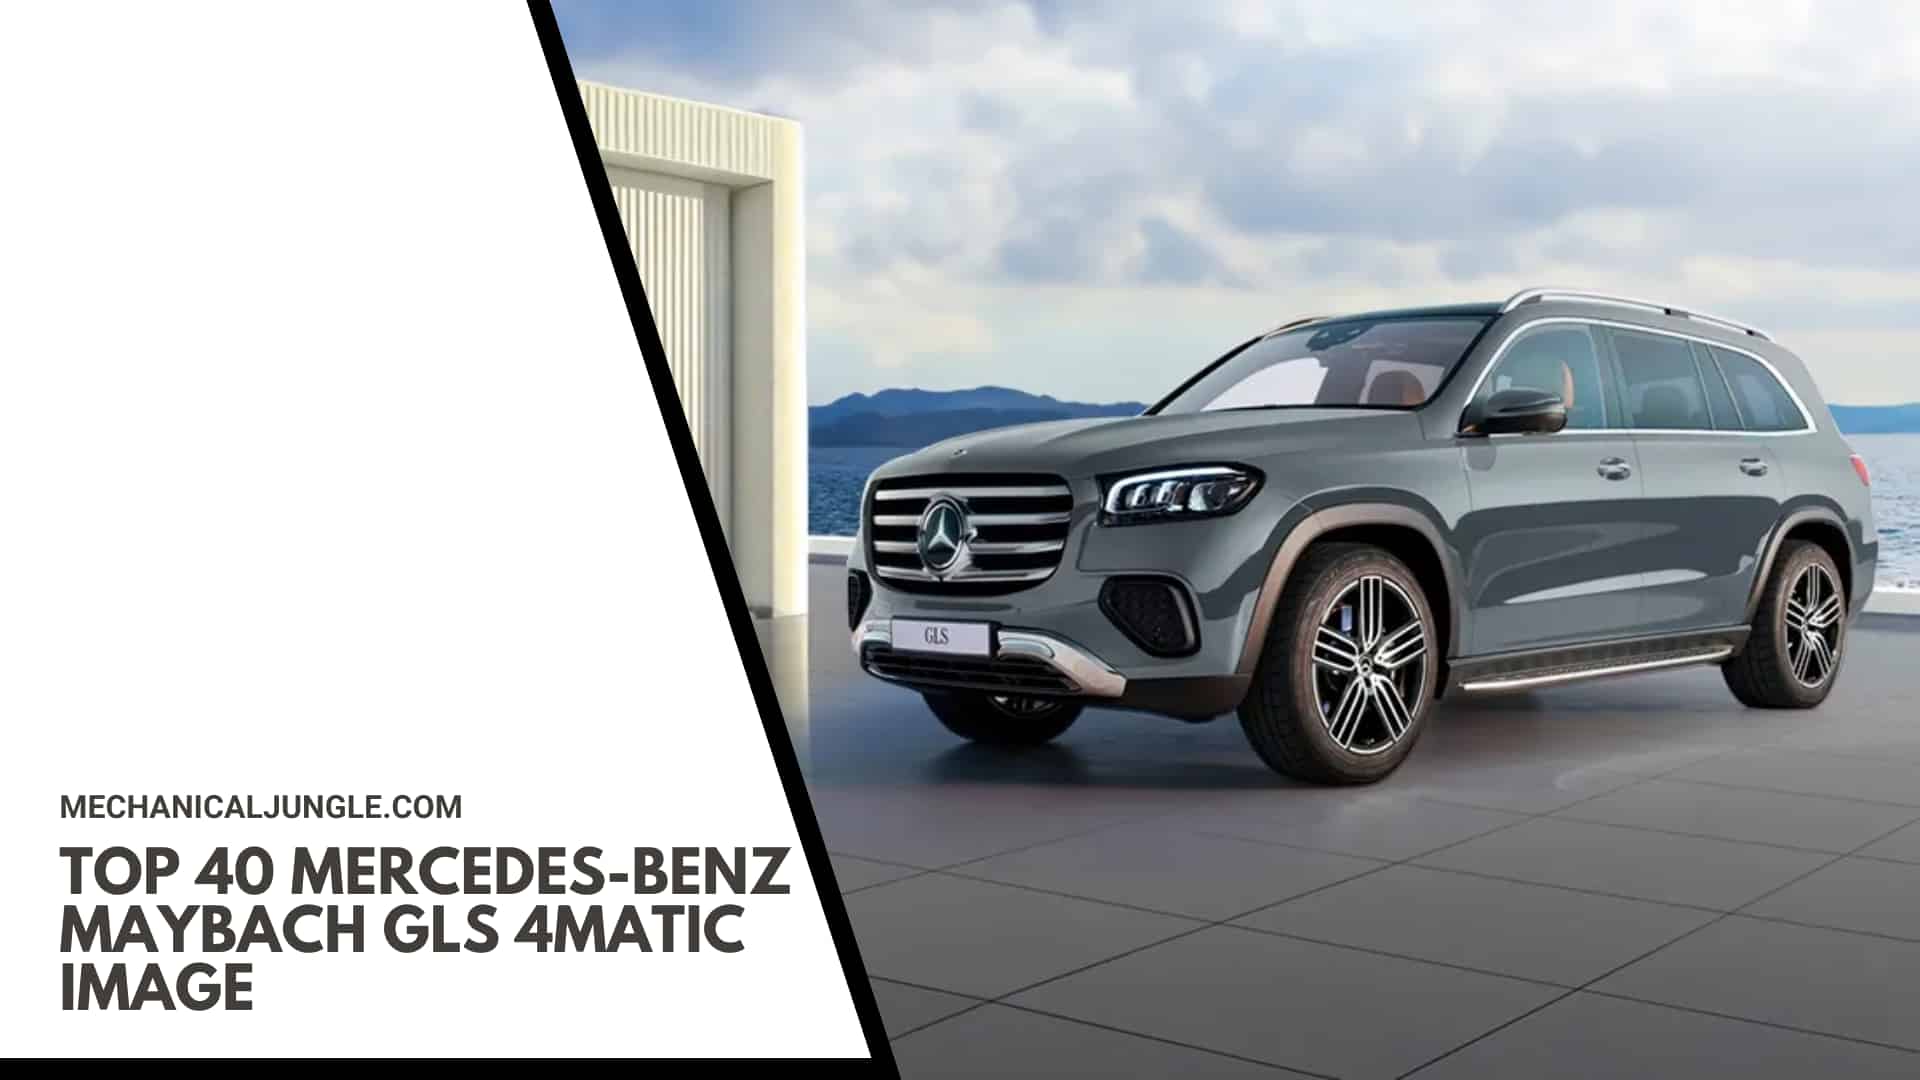 Top 40 Mercedes-Benz Maybach GLS 4MATIC Image